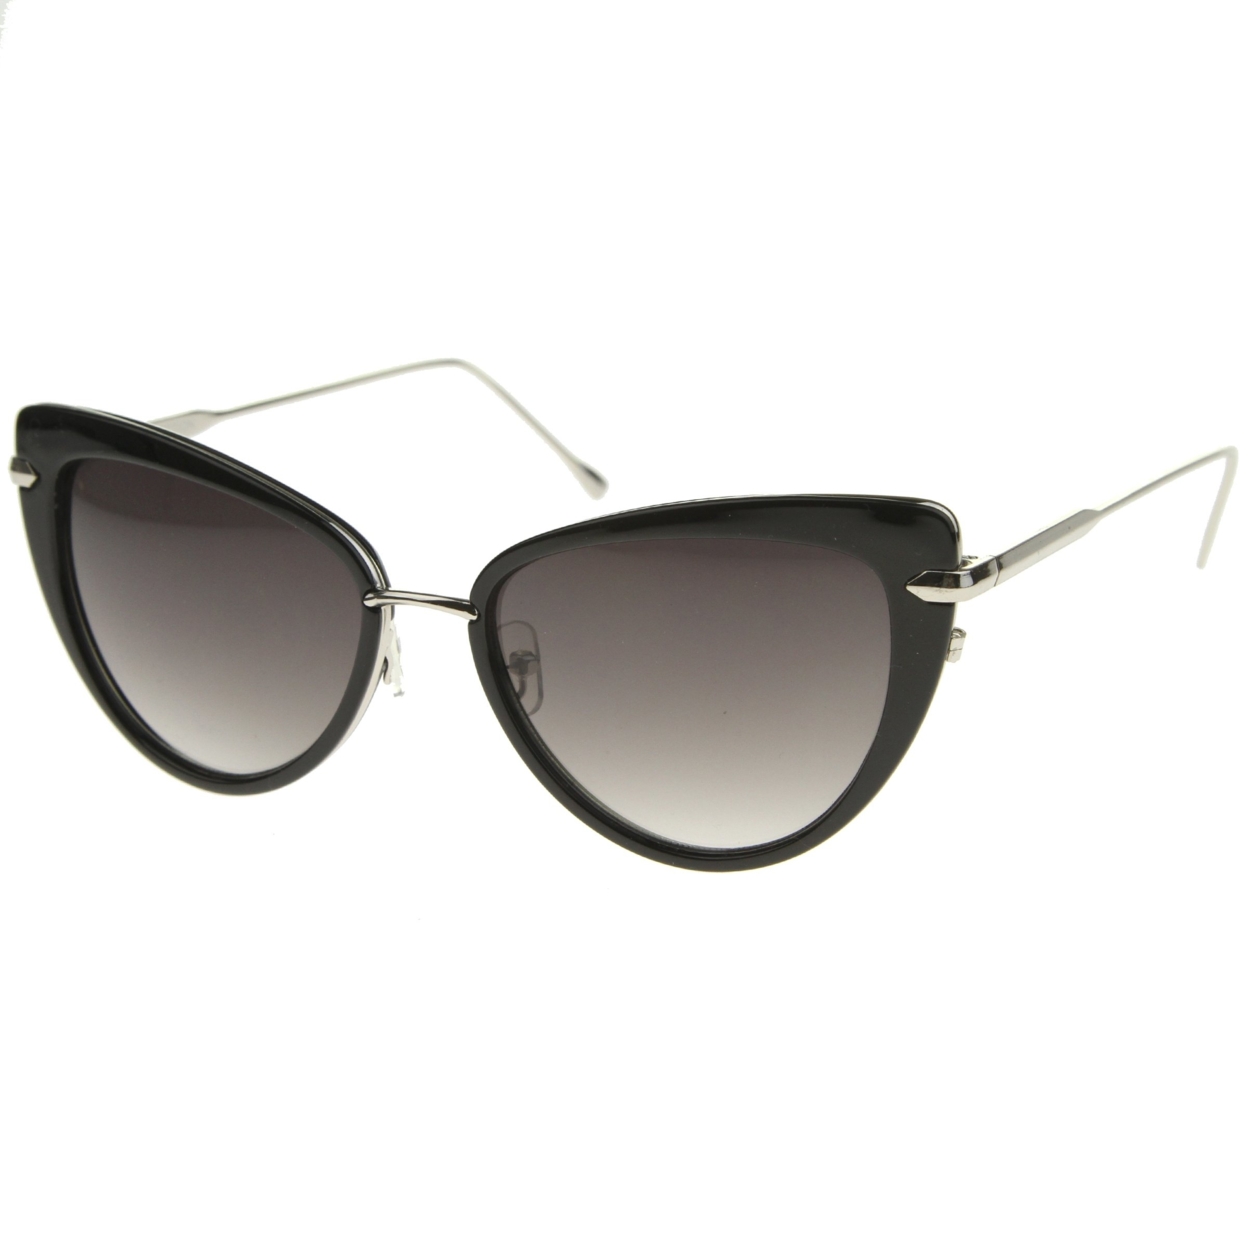 Women's Glam High Fashion Ultra Thin Metal Temple Cat Eye Sunglasses 55mm - Black-Silver / Lavender